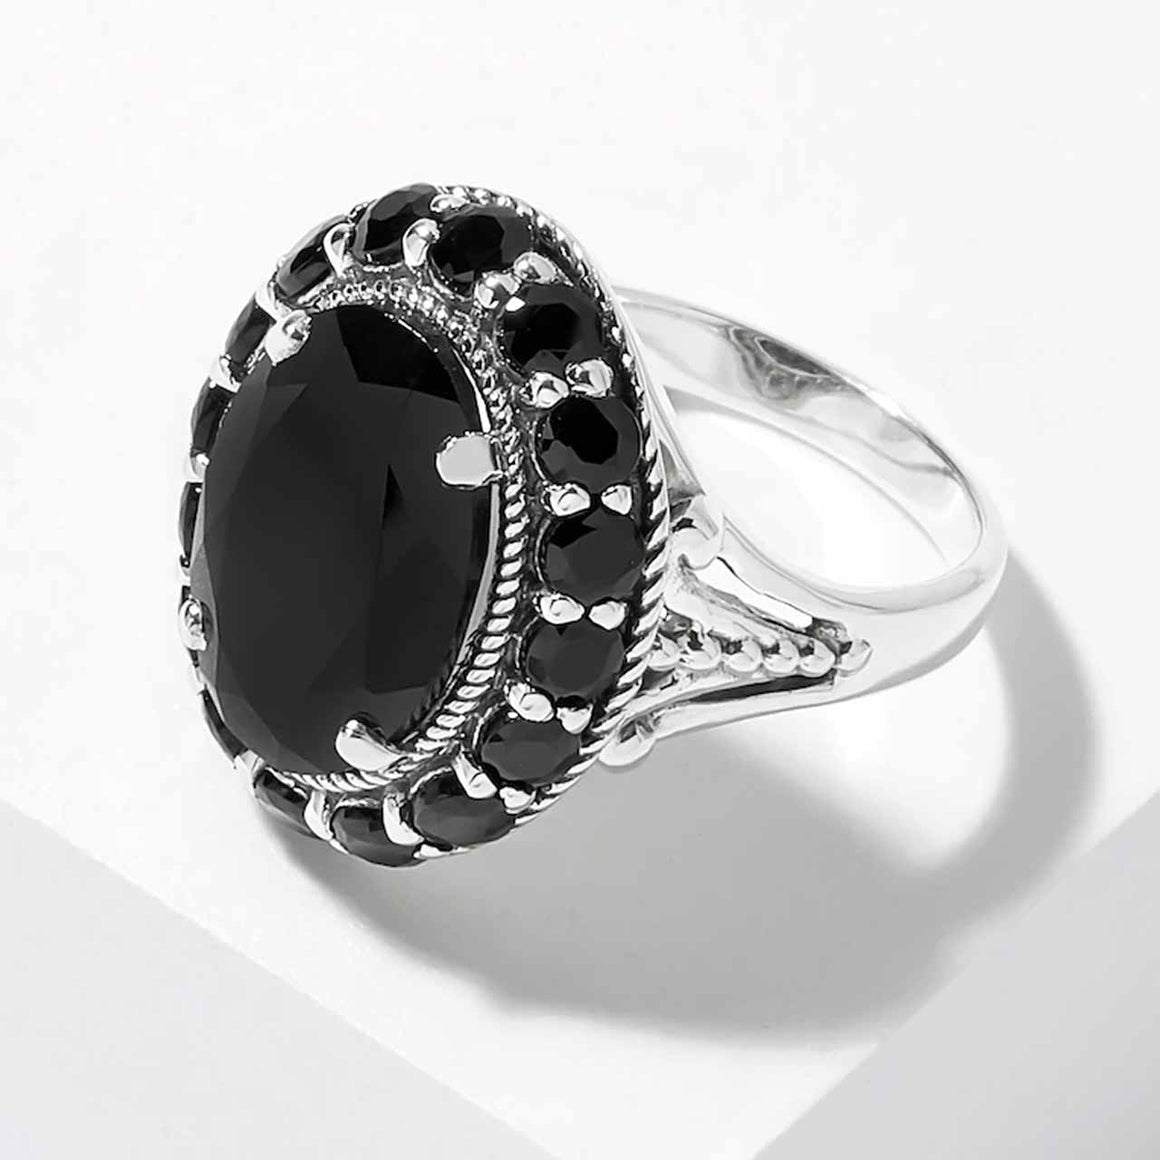 Black Spinel Cocktail Ring